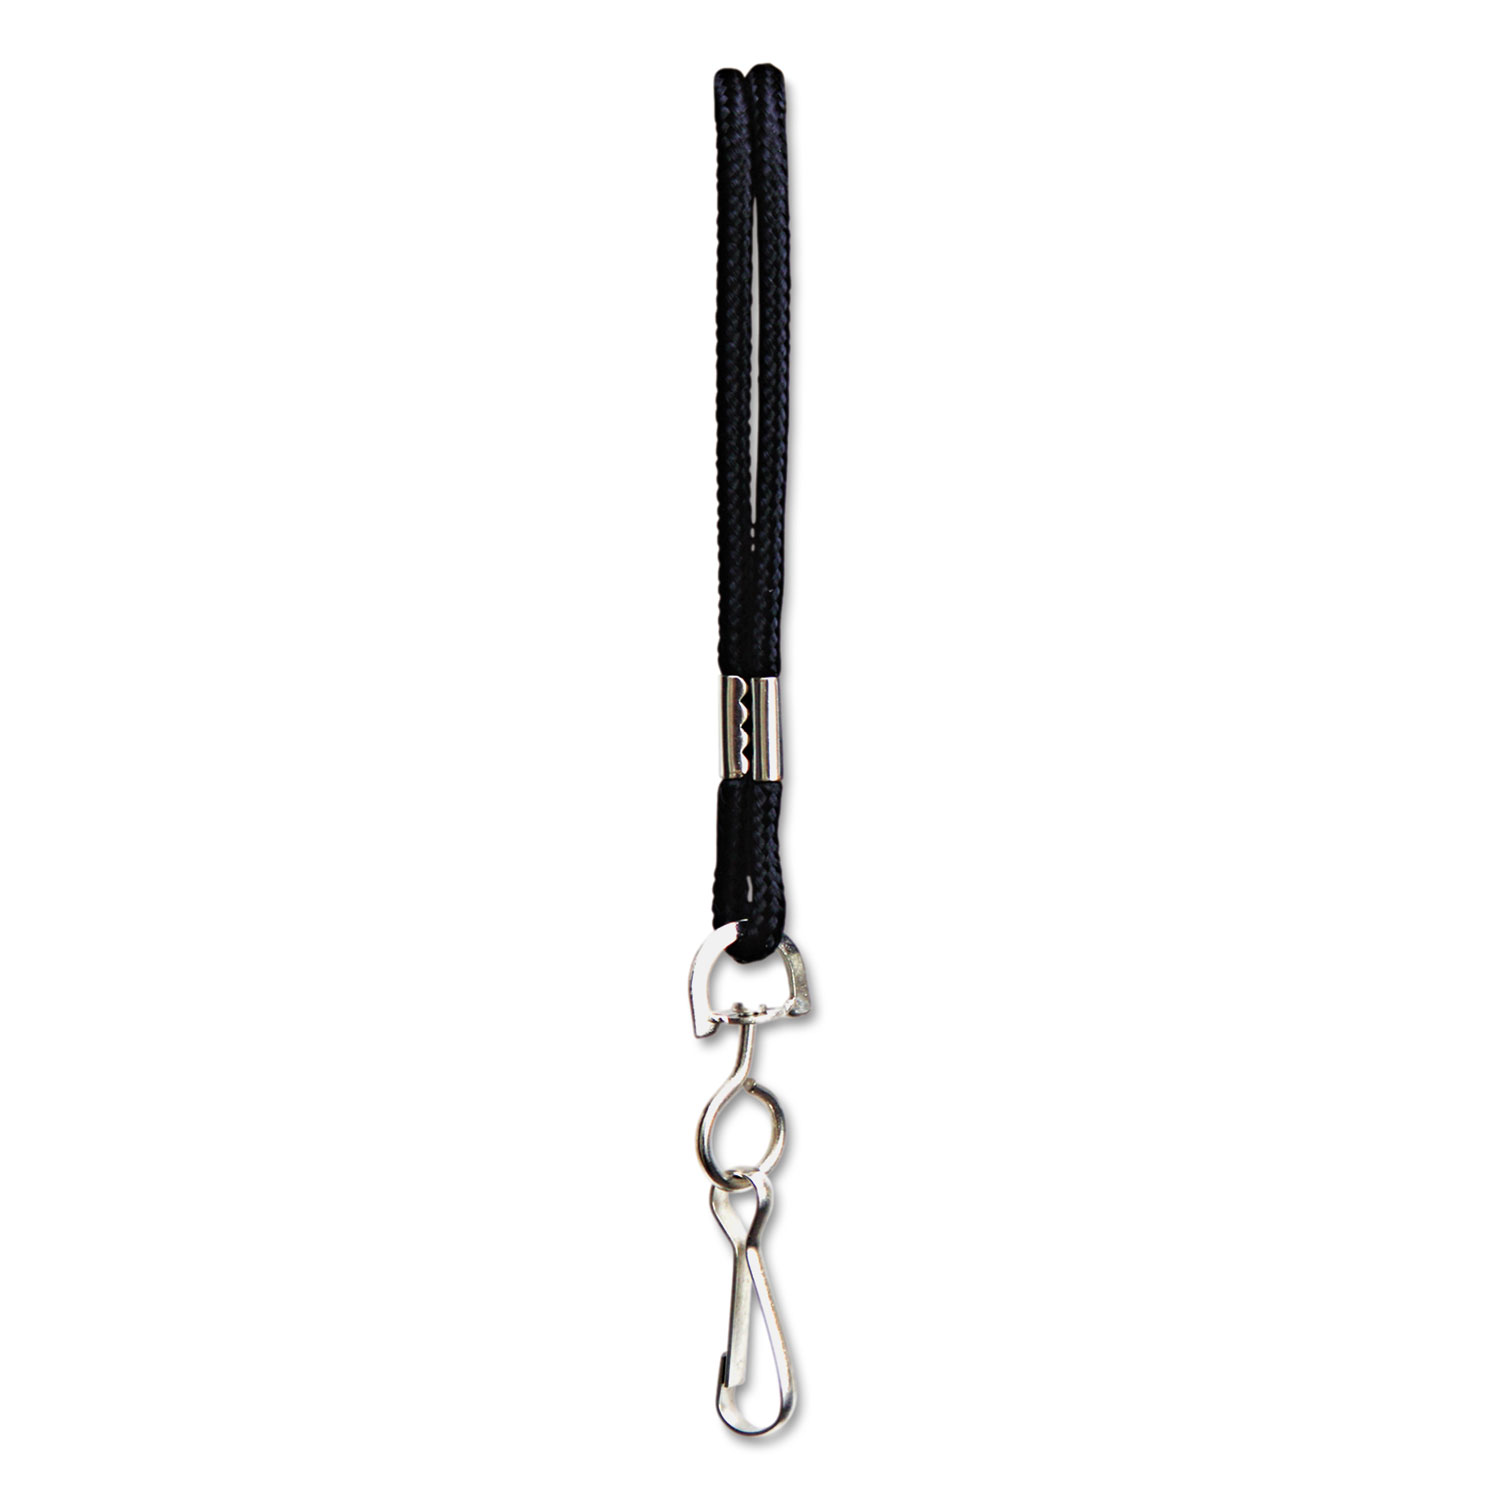 Rope Lanyard with Hook, 36, Nylon, Black